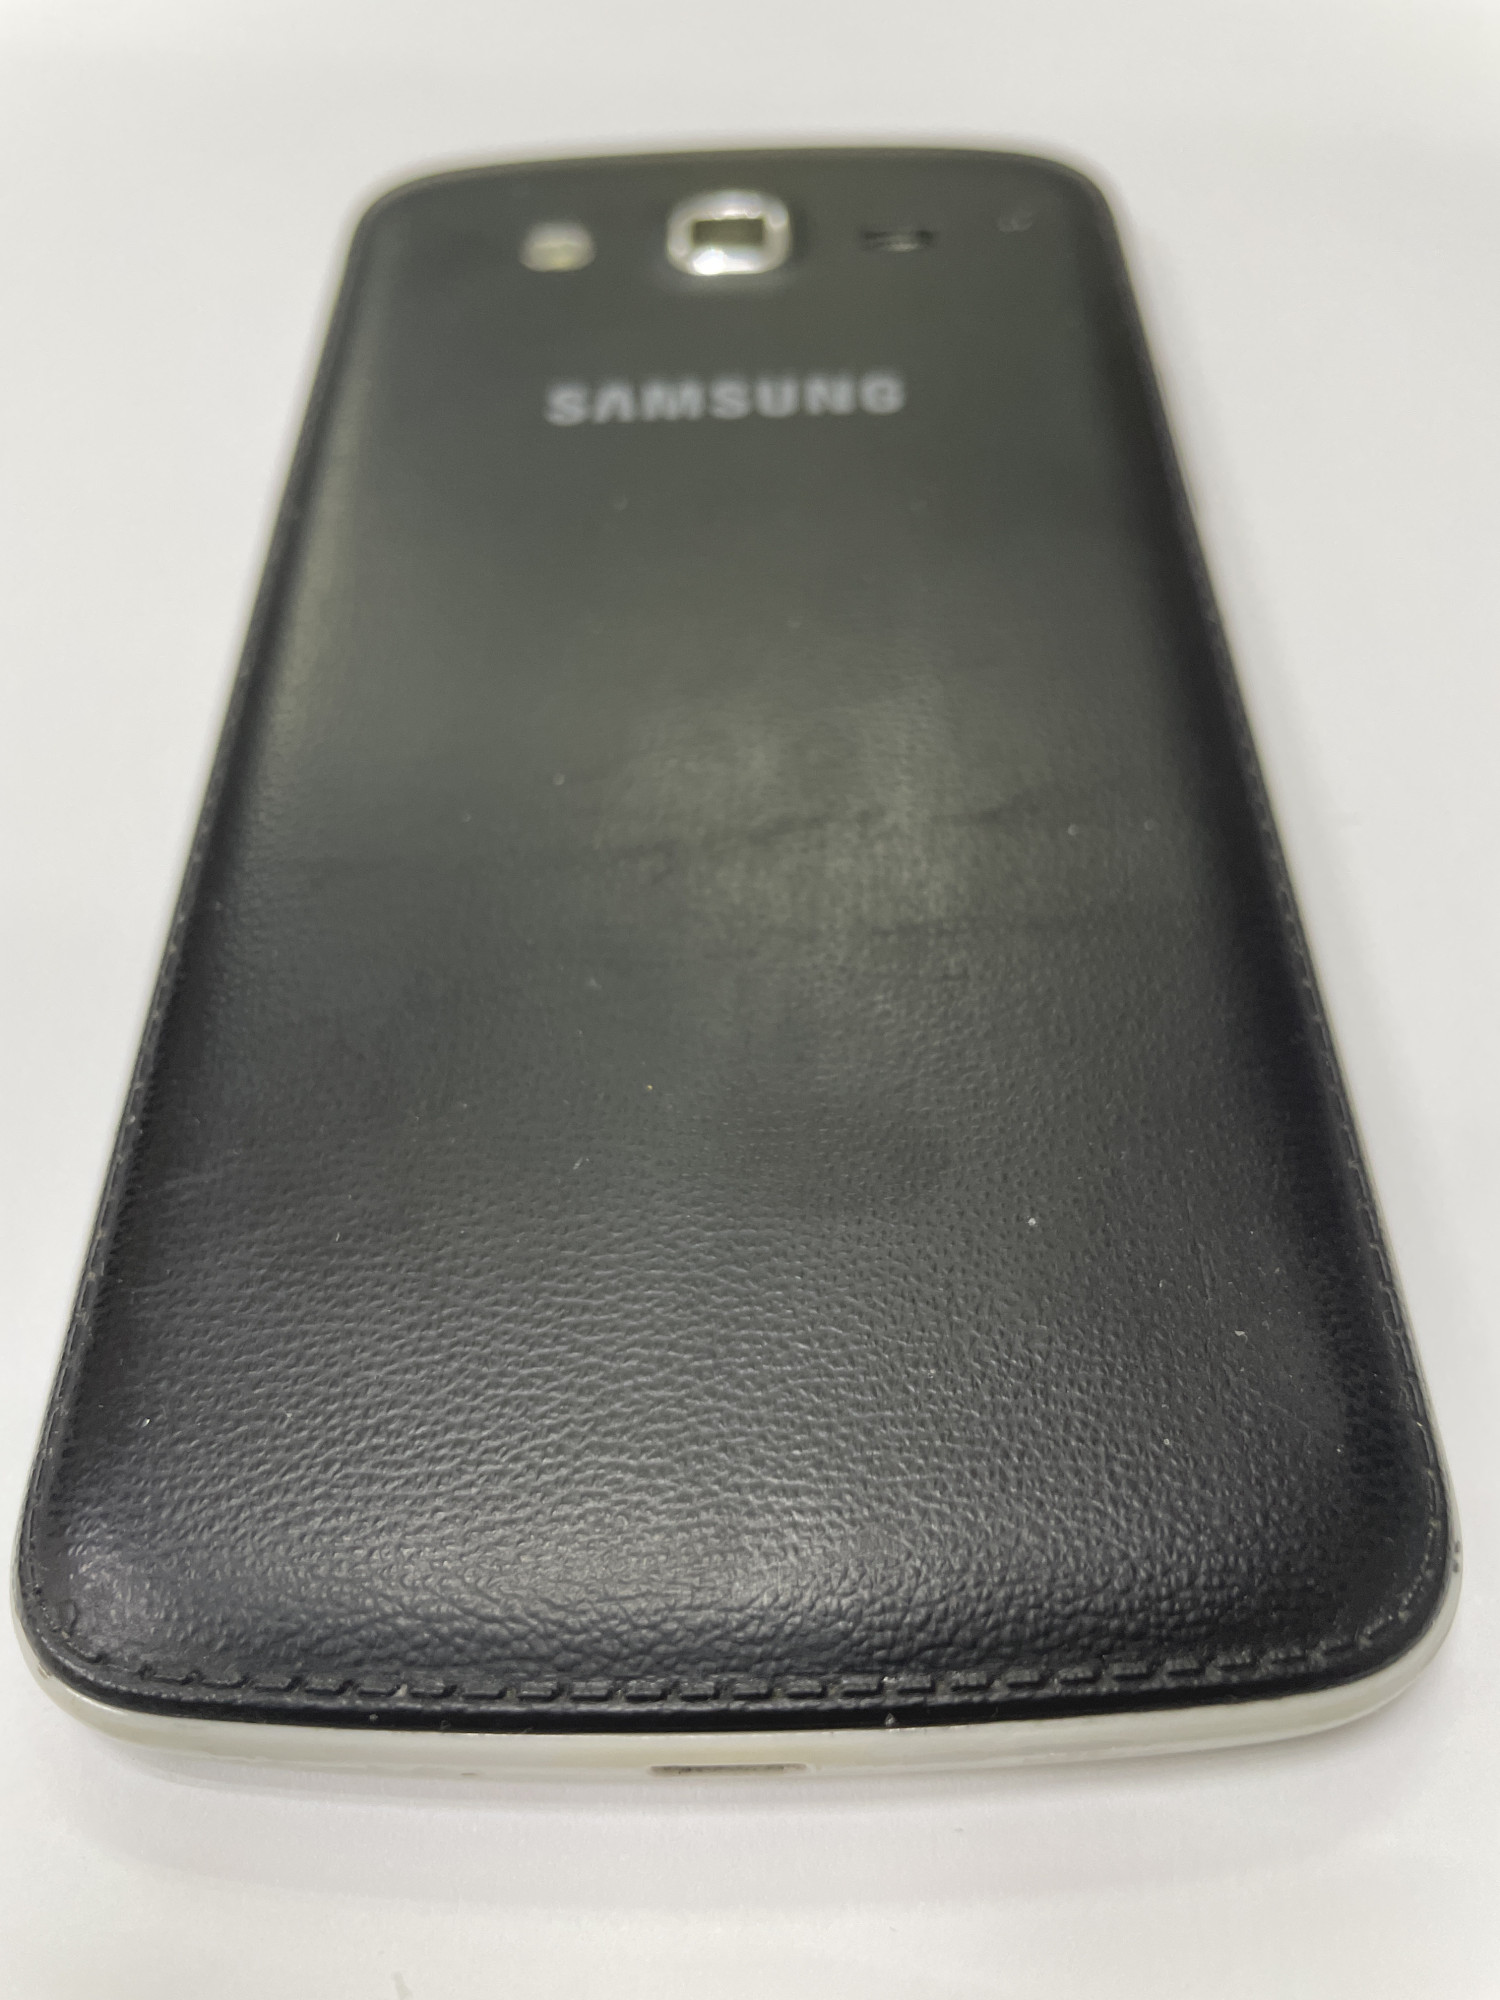 Samsung Galaxy Grand 2 (SM-G7102) 1/8Gb Black 2